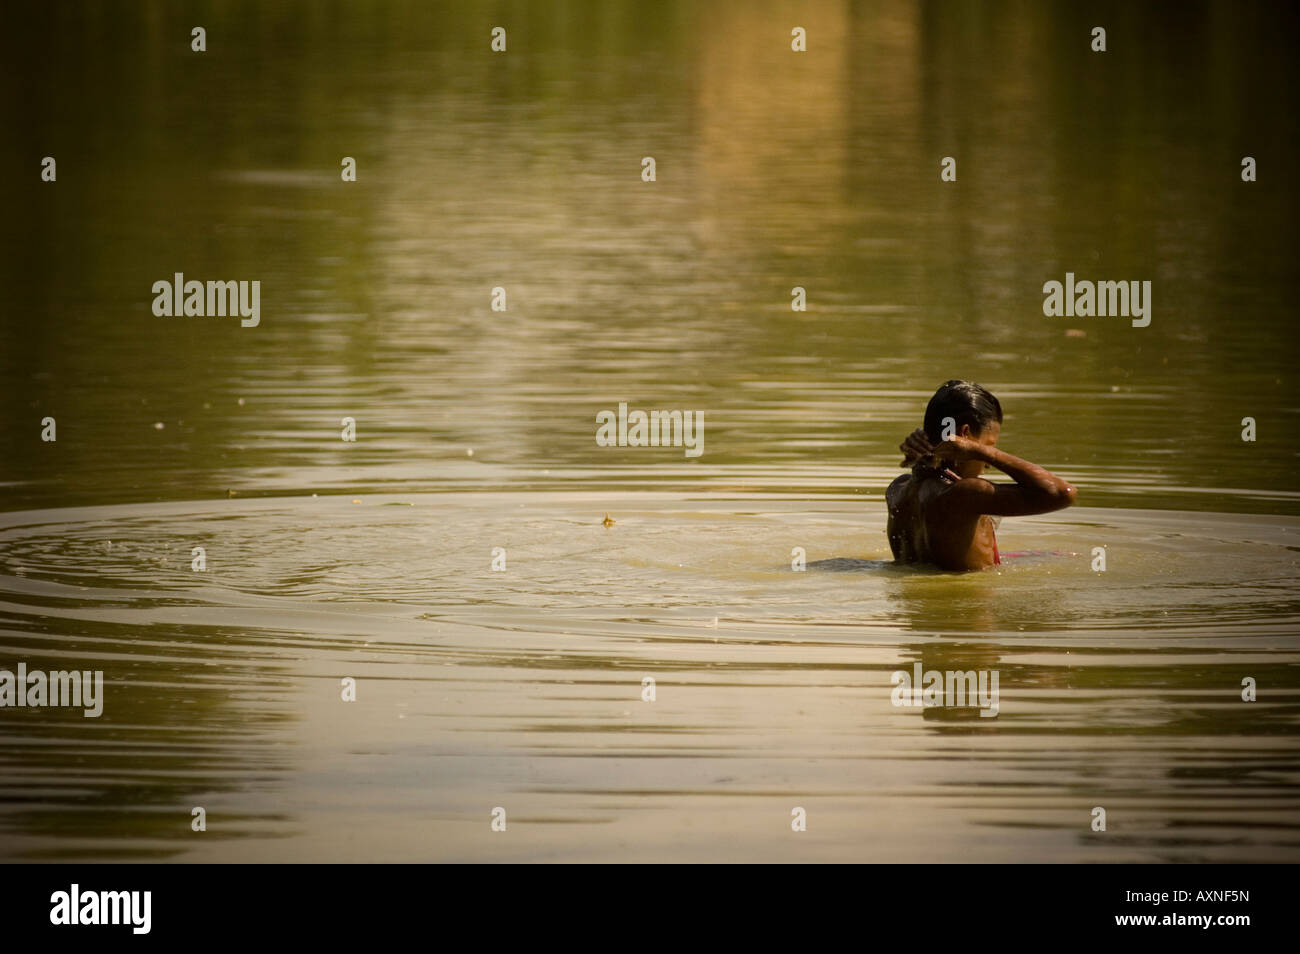 Washing in the river, Bangladesh Stock Photo